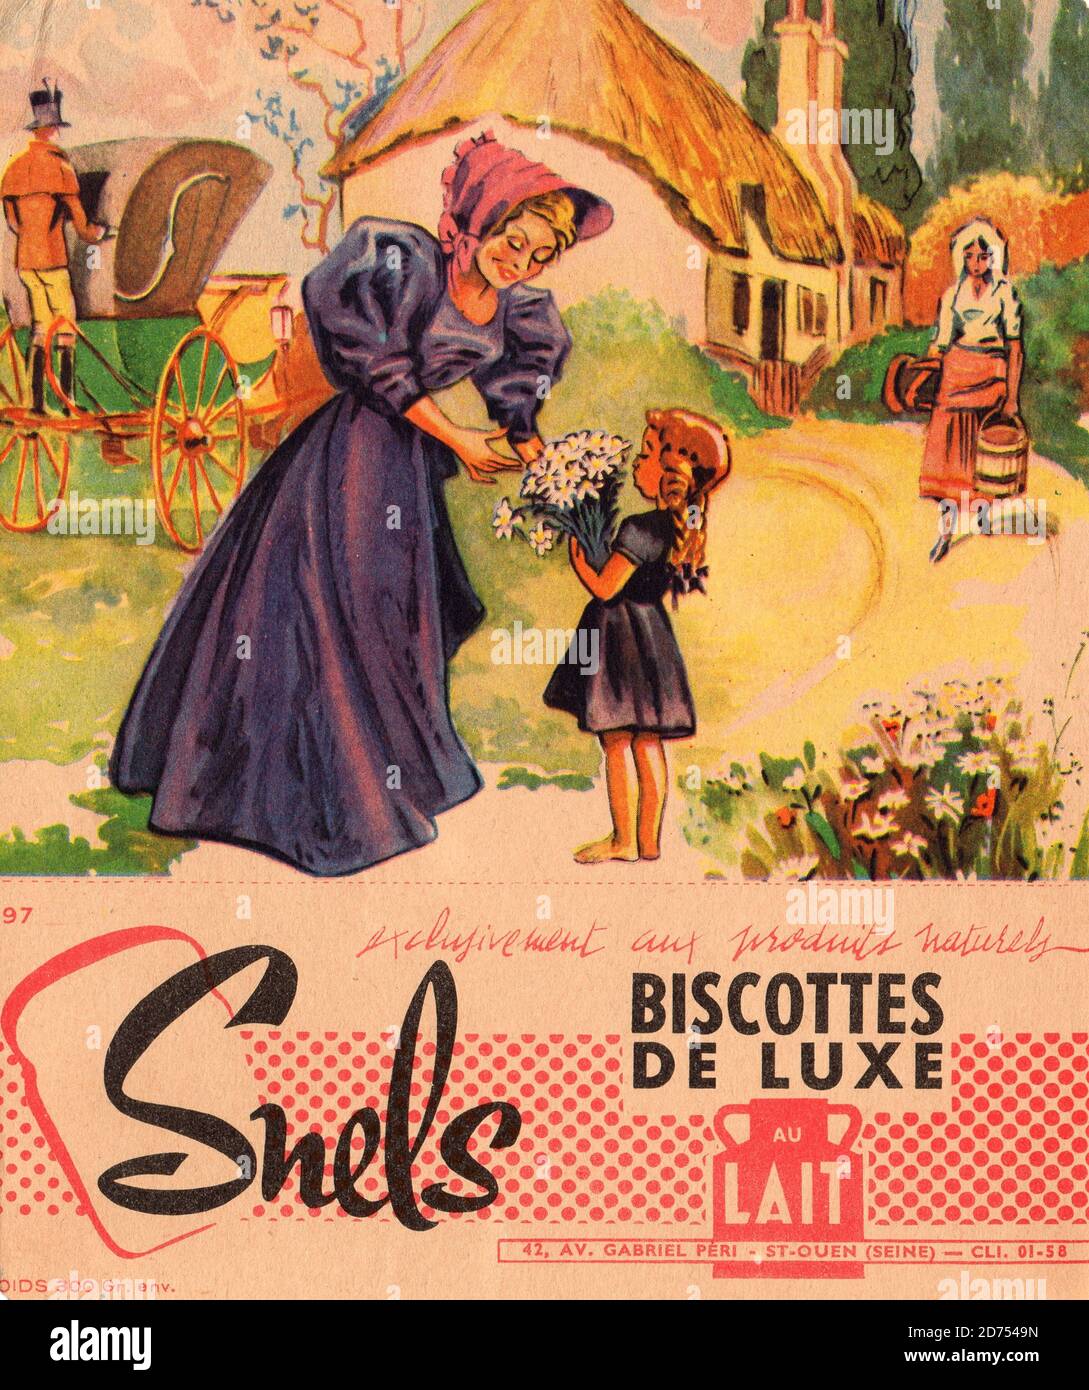 Buvard biscotte Snels vers 1950 Stock Photo